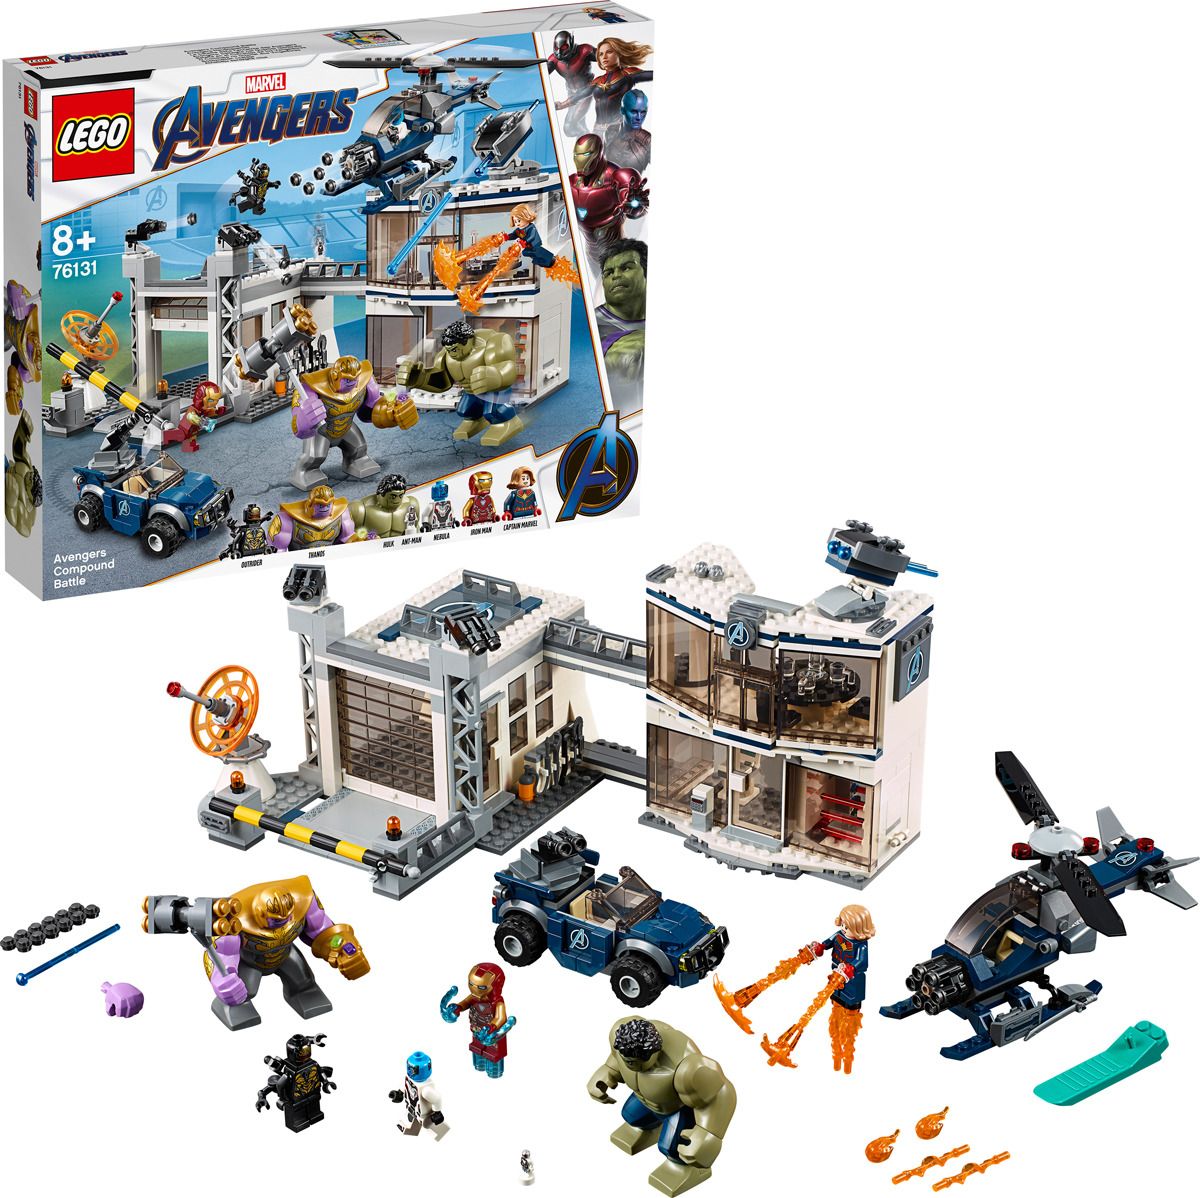 LEGO Super Heroes       76131